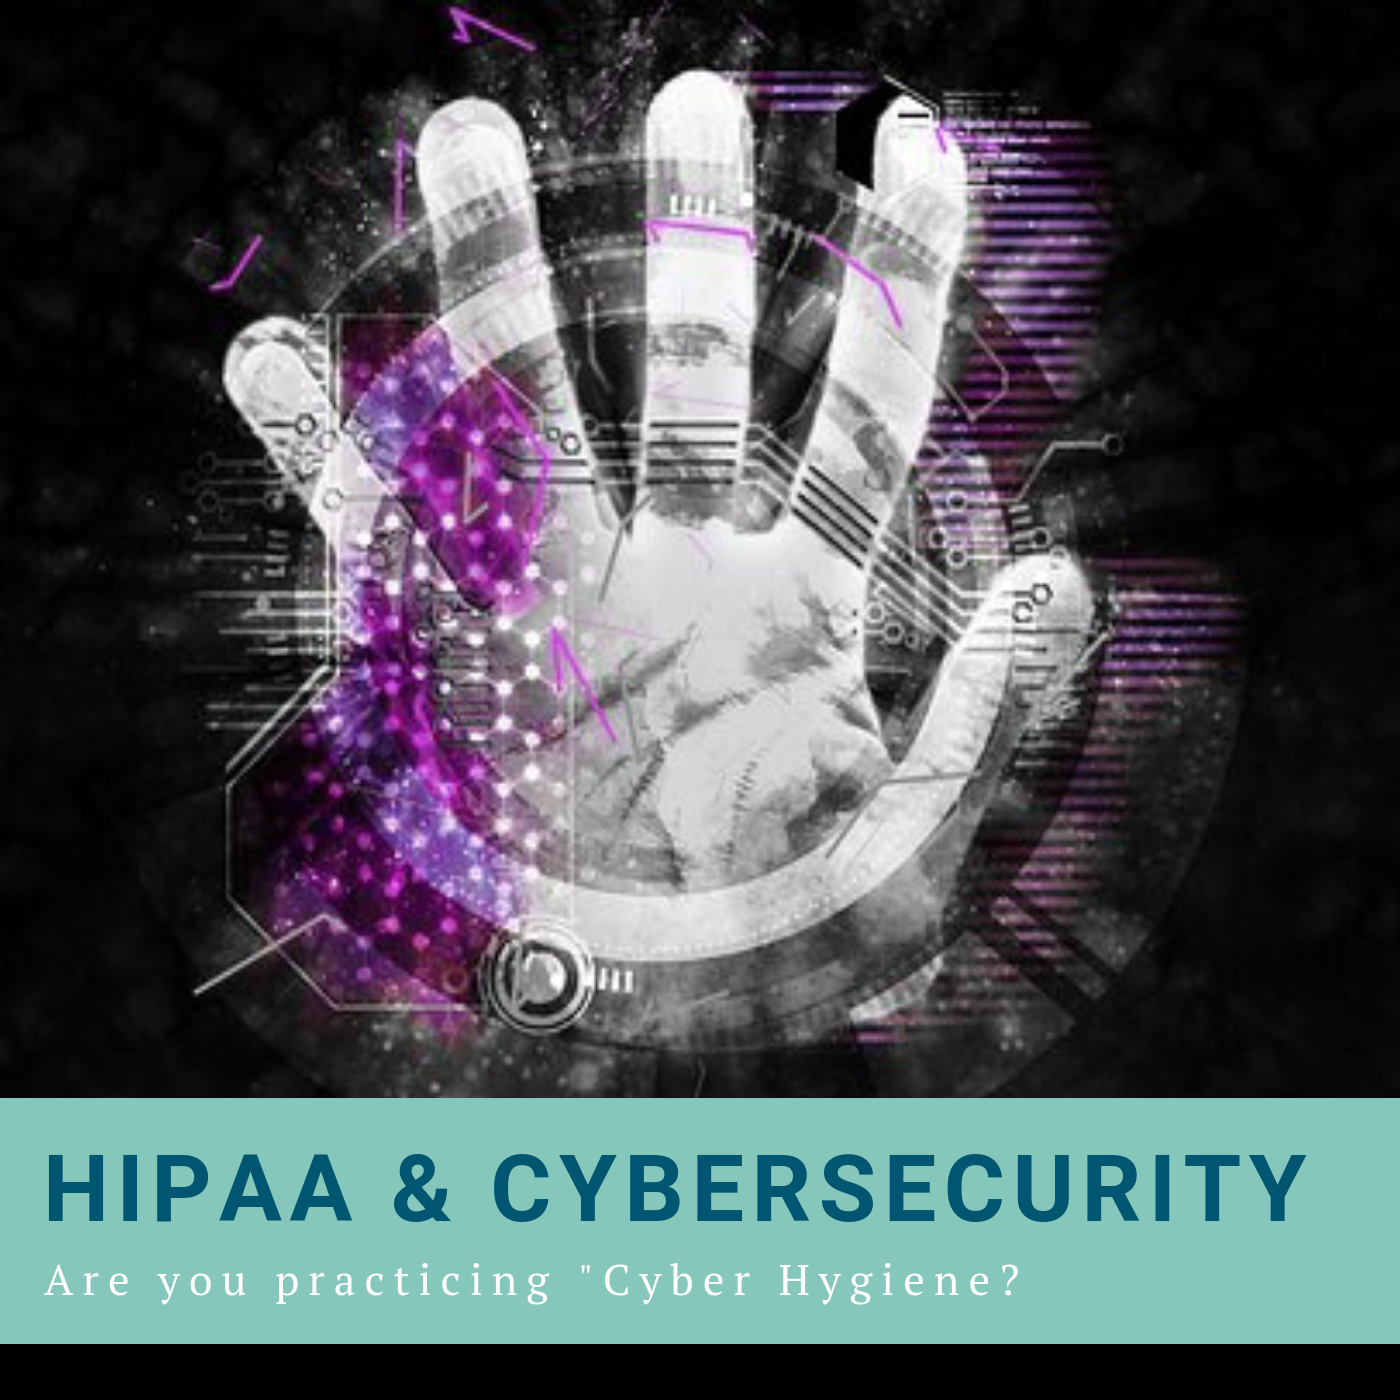 HIPAA and Cybersecurity Image